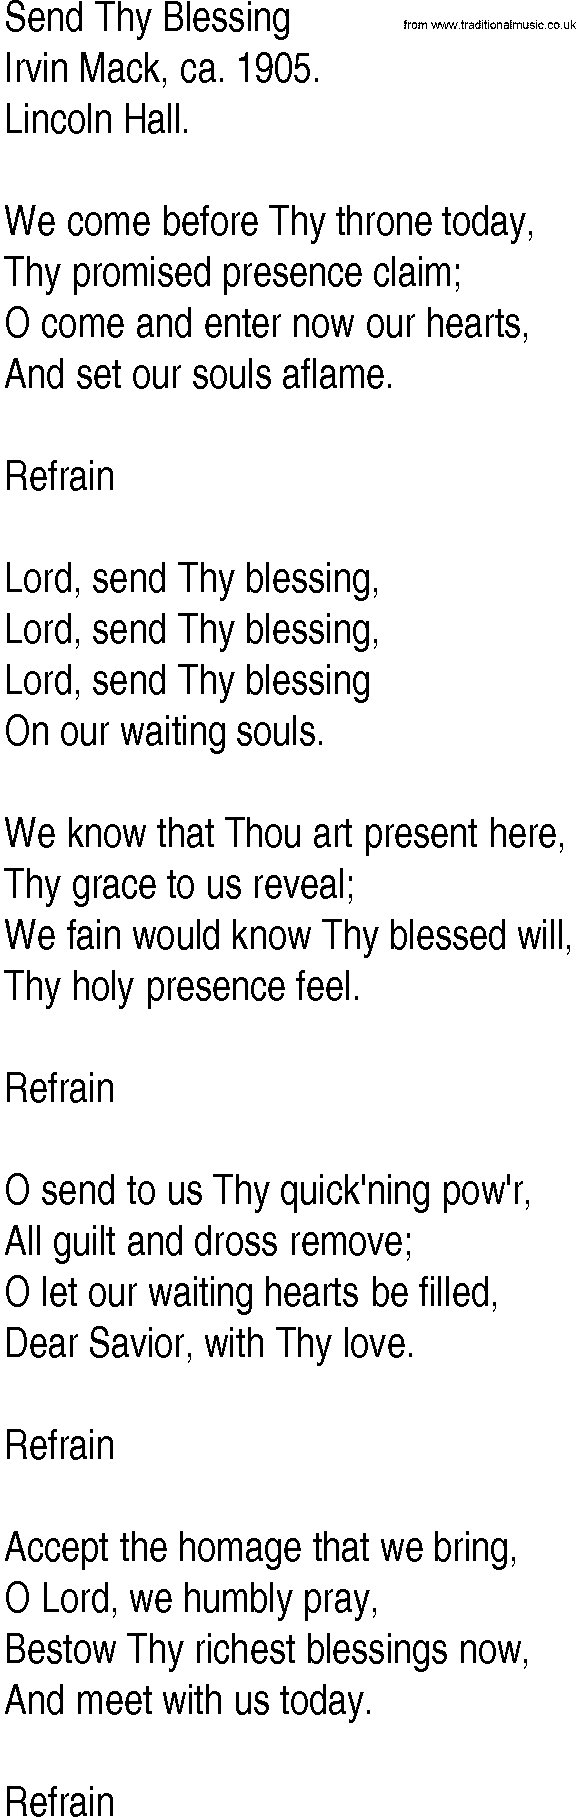 Hymn and Gospel Song: Send Thy Blessing by Irvin Mack ca lyrics